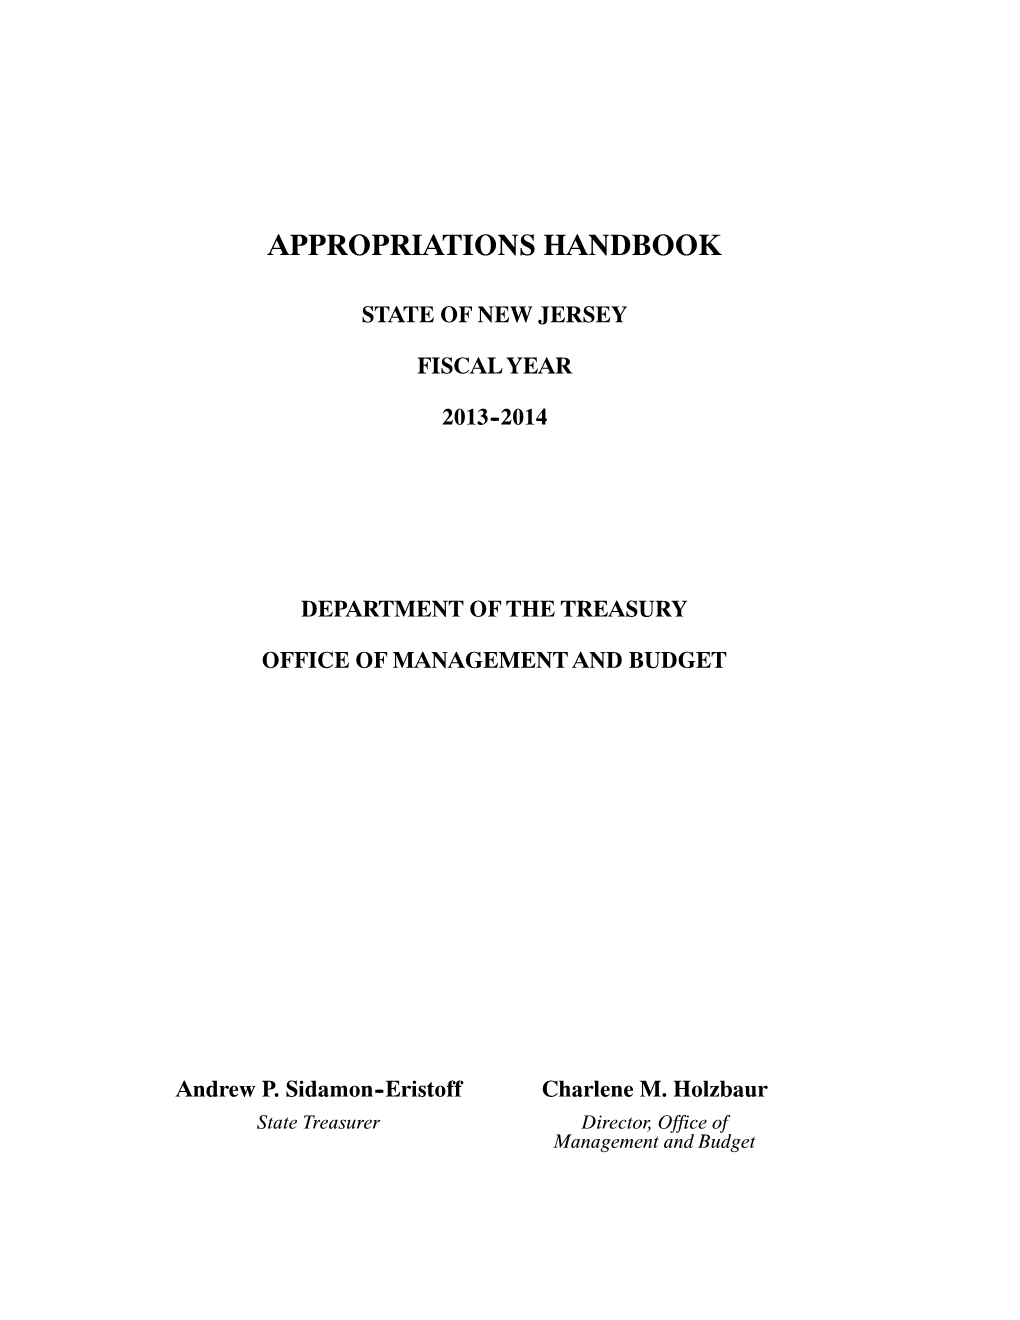 FY14 Appropriations Handbook